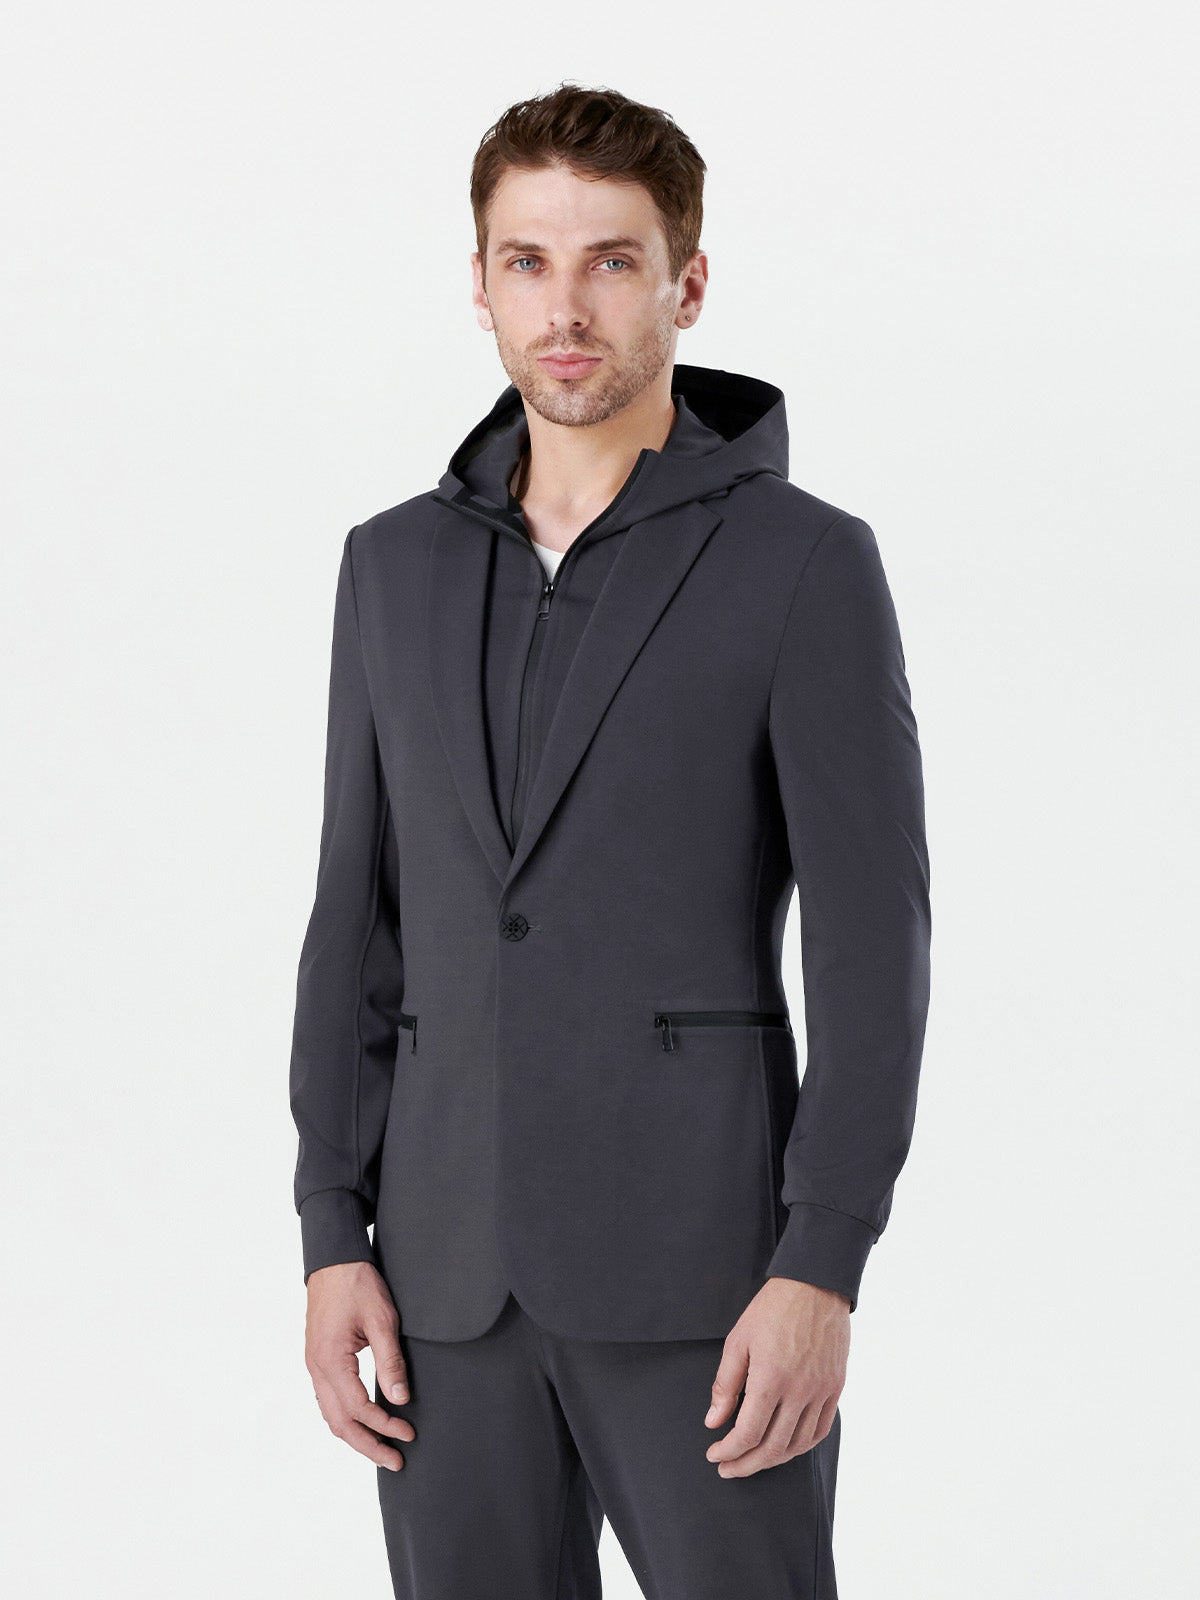 xJacket Sport  Flexible Detachable Hood Suit Jacket Blazer